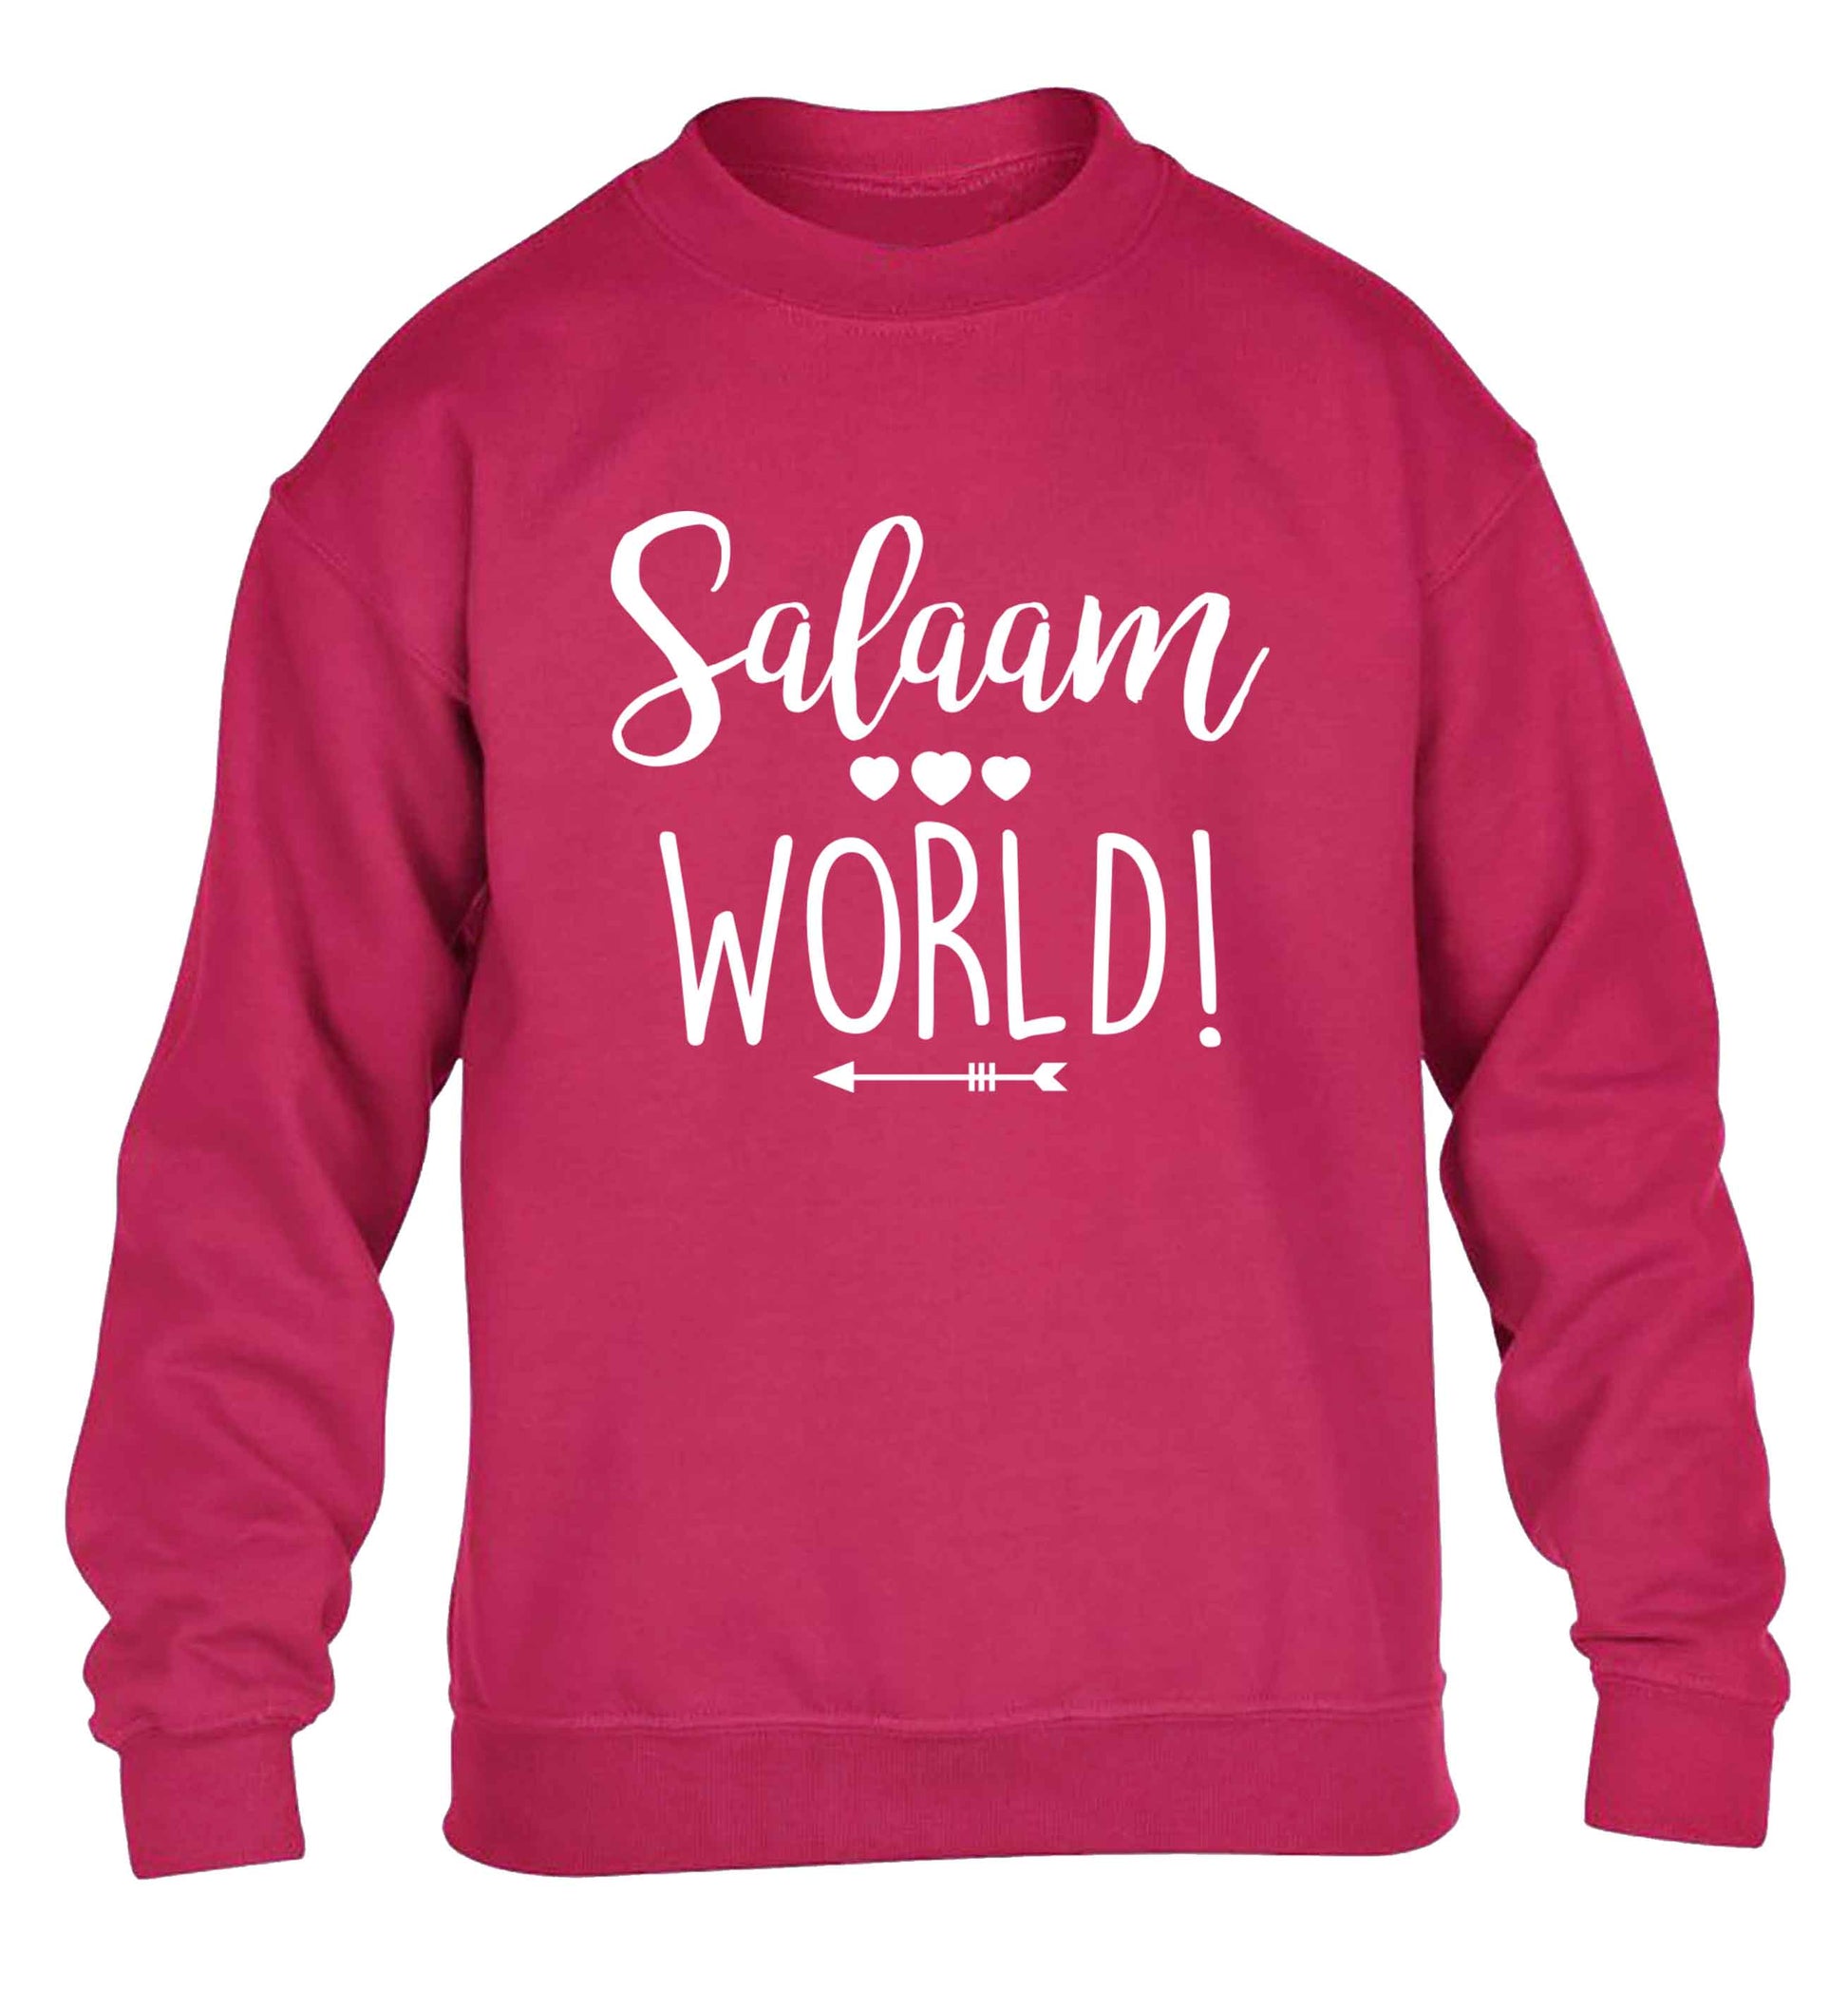 Salaam world children's pink sweater 12-13 Years